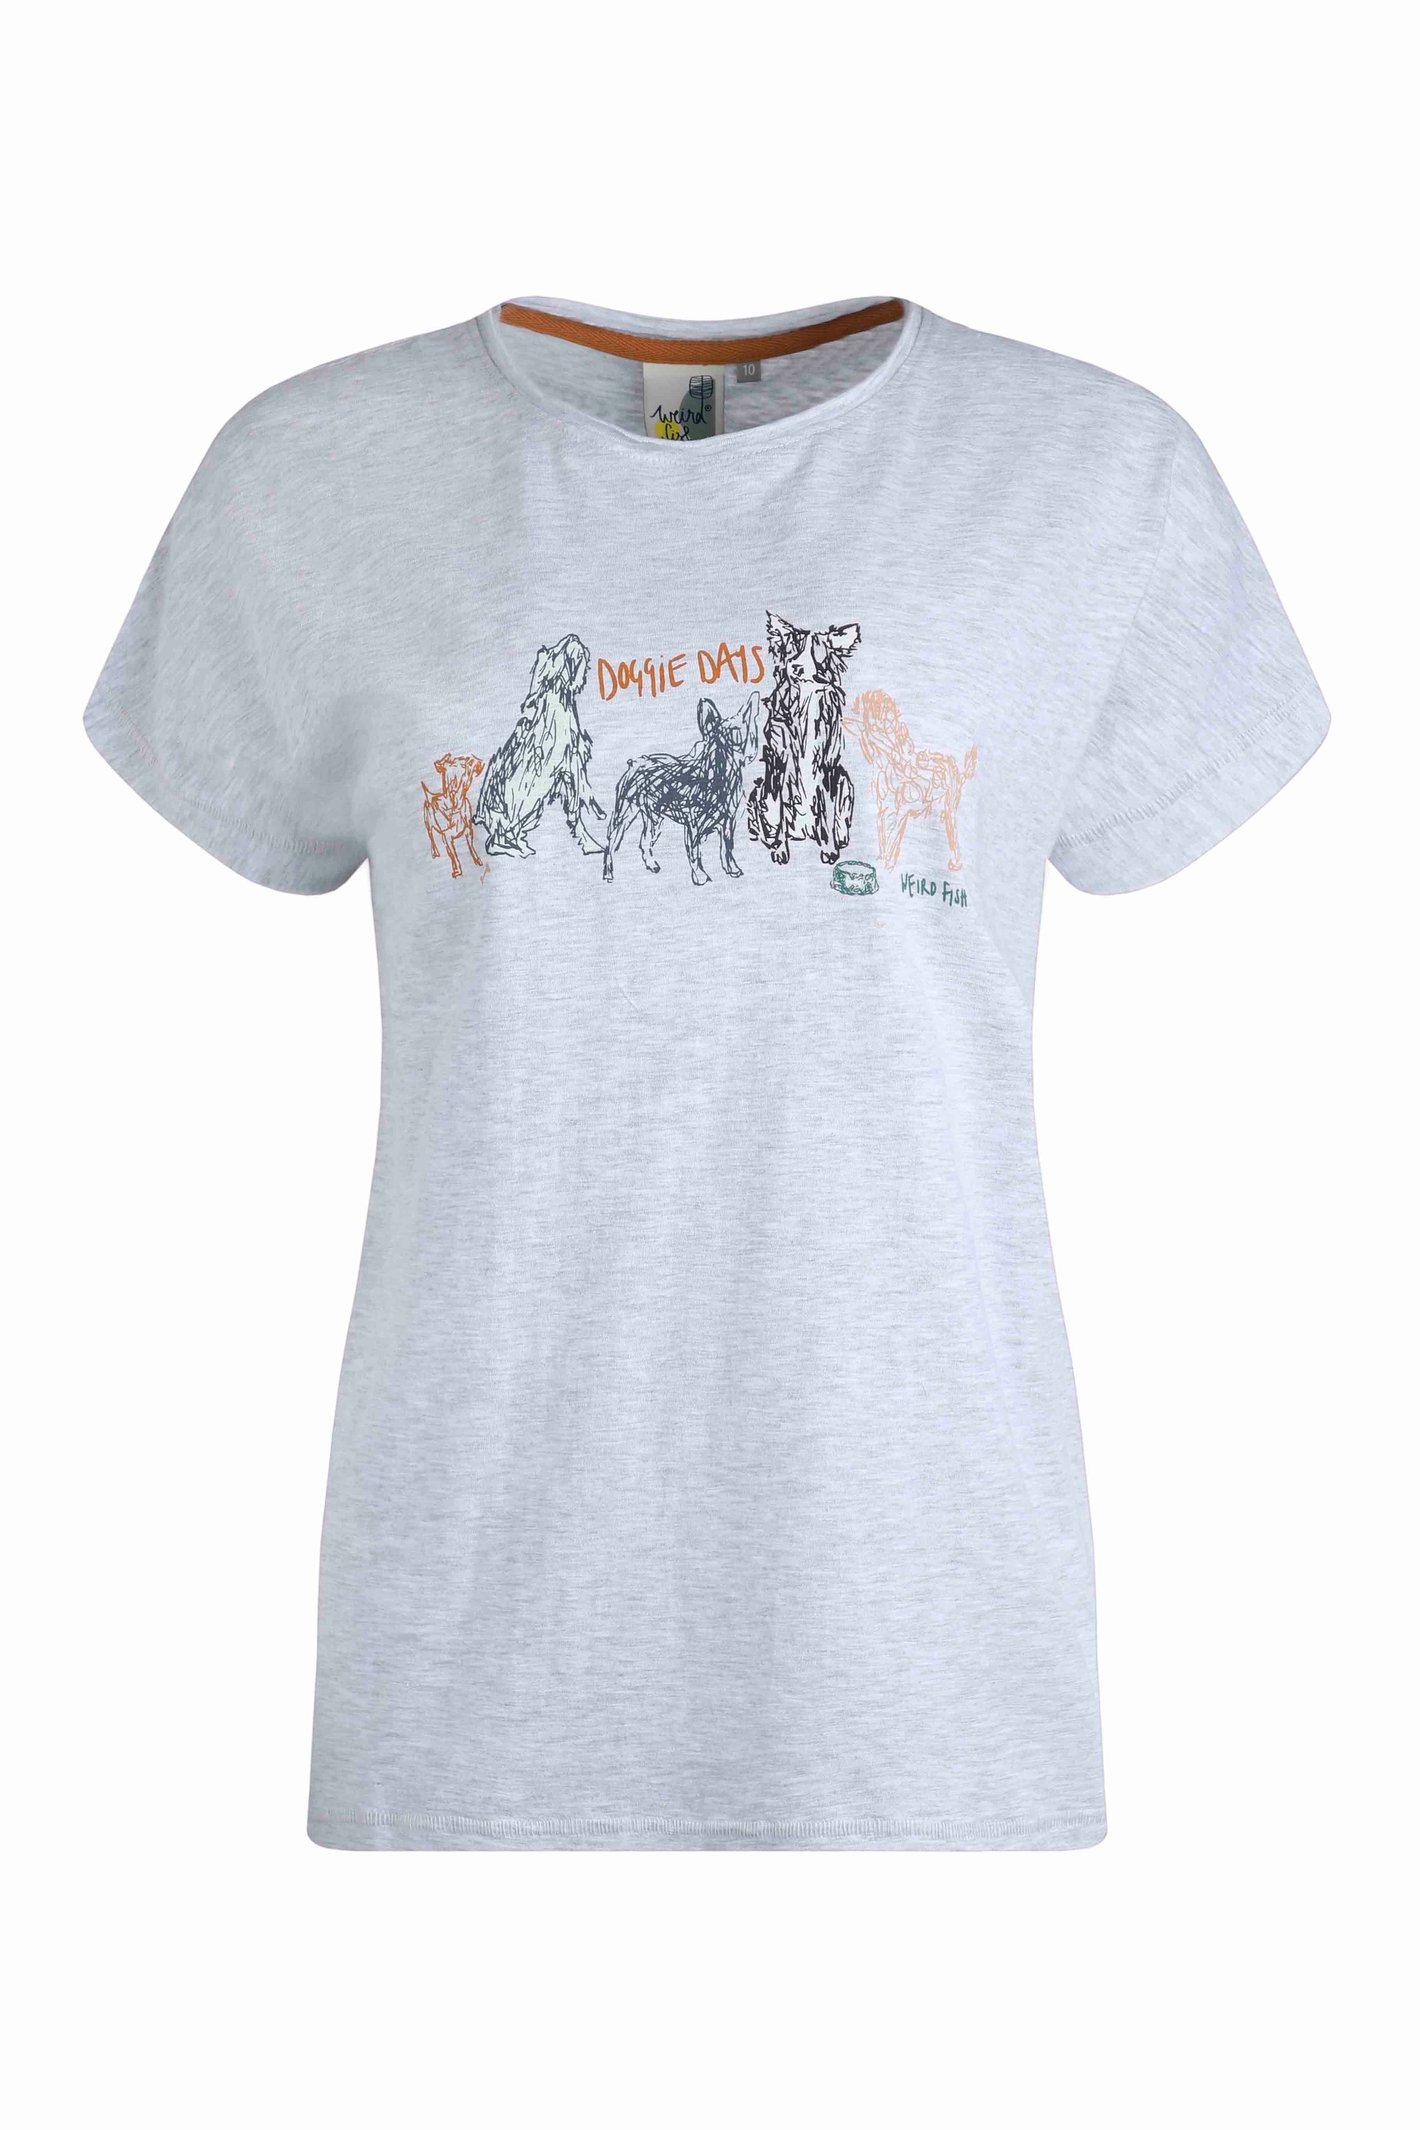 Weird Fish Doggie Day Organic Graphic T-Shirt Grey Marl Size 22